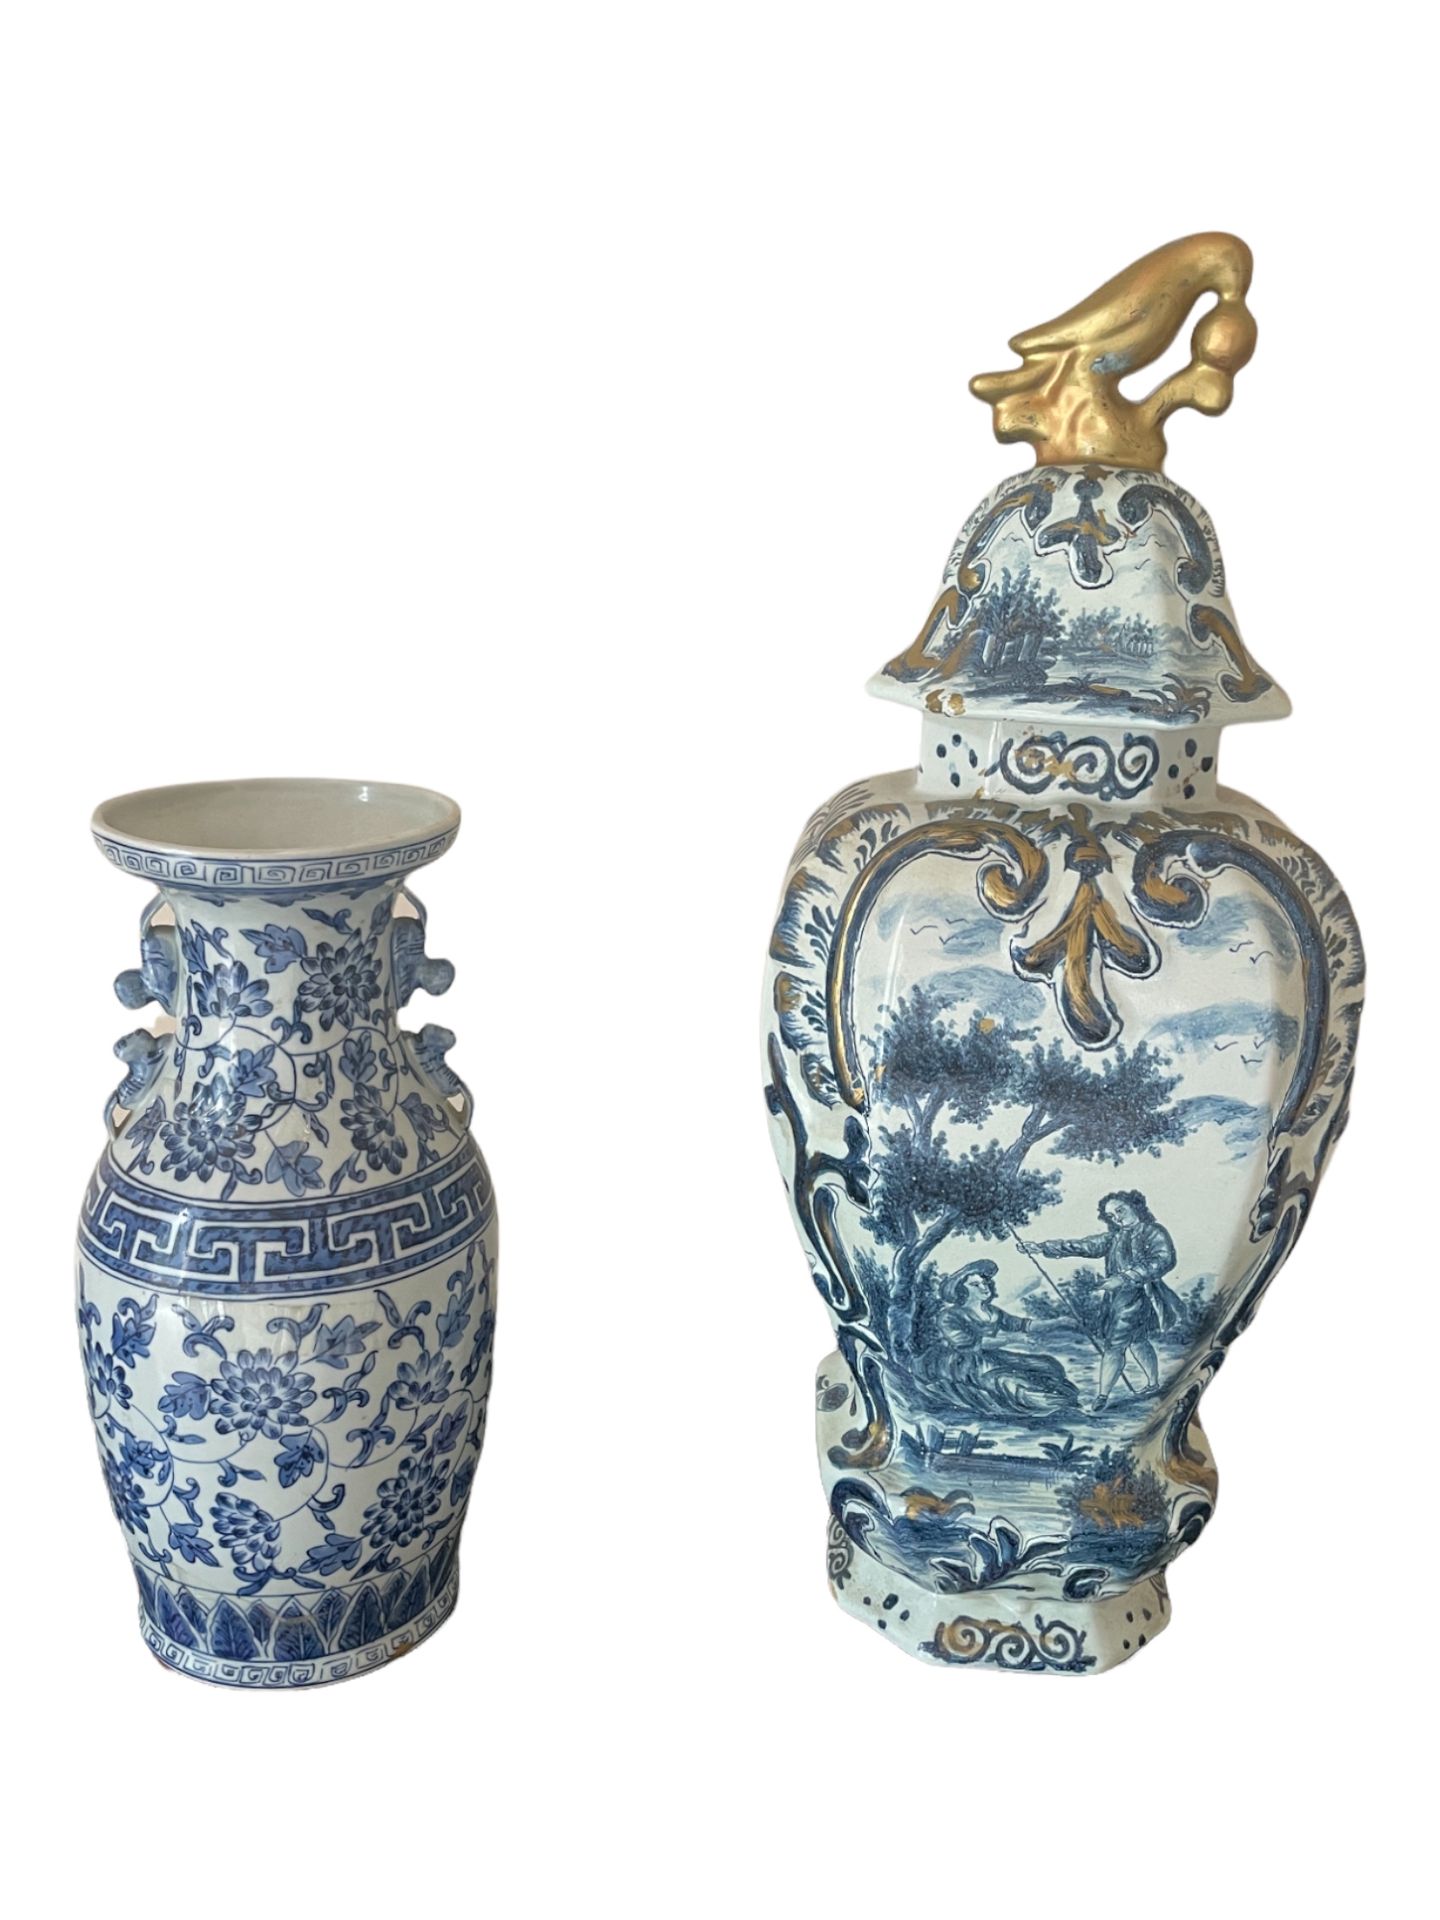 Null *在中国和代尔夫特的味道中

釉下蓝色装饰的瓷瓶和有盖陶瓶

H.34和56厘米